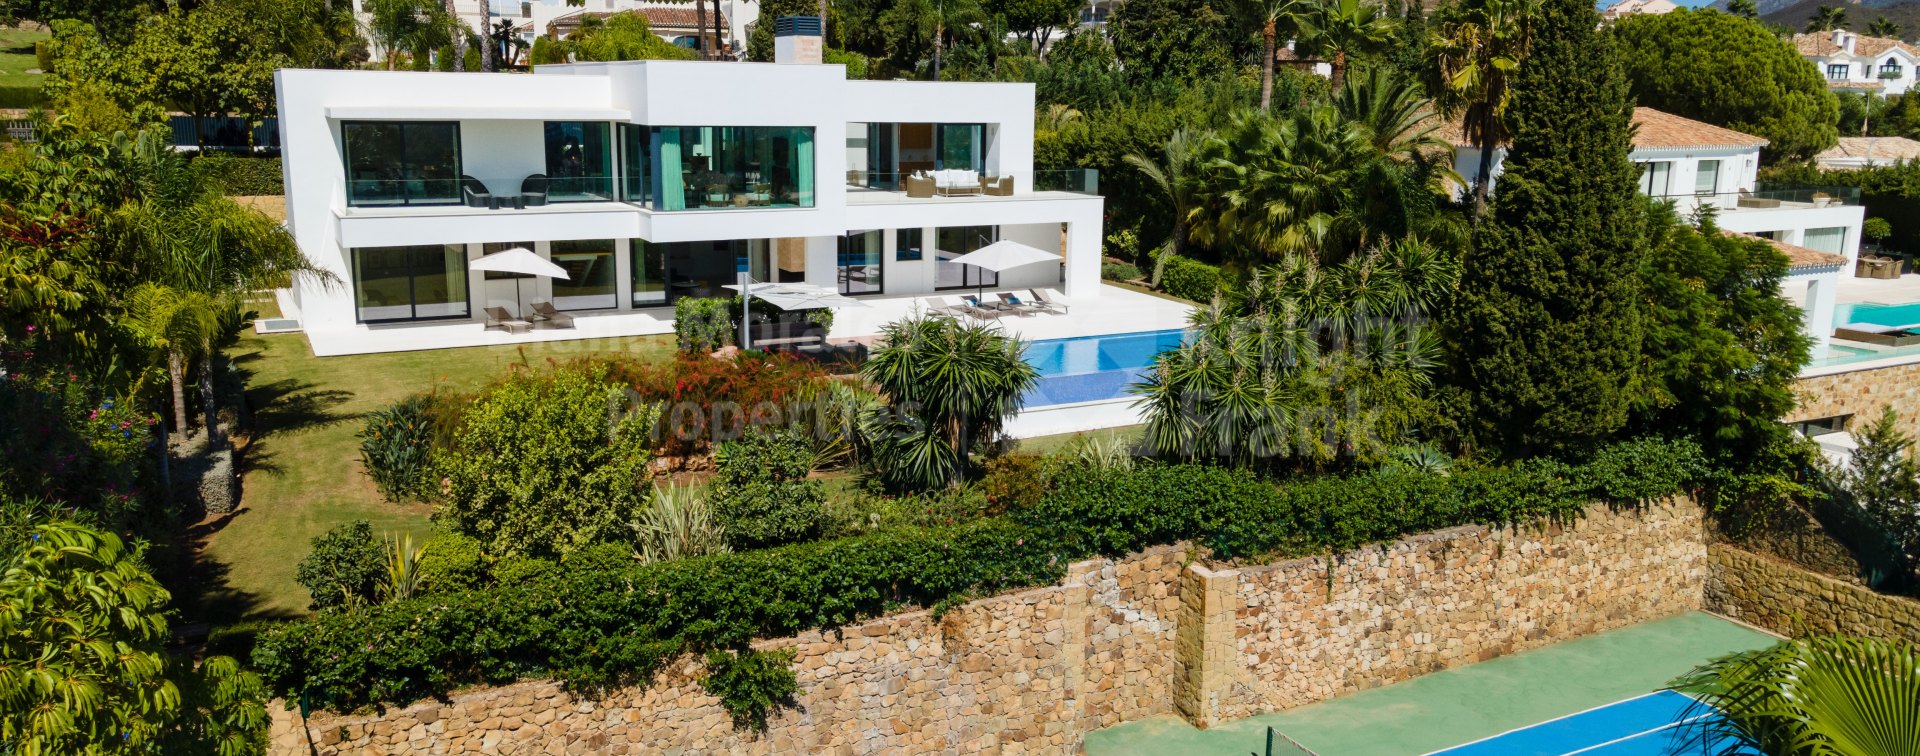 La Cerquilla, Villa with contemporary style and excellent views